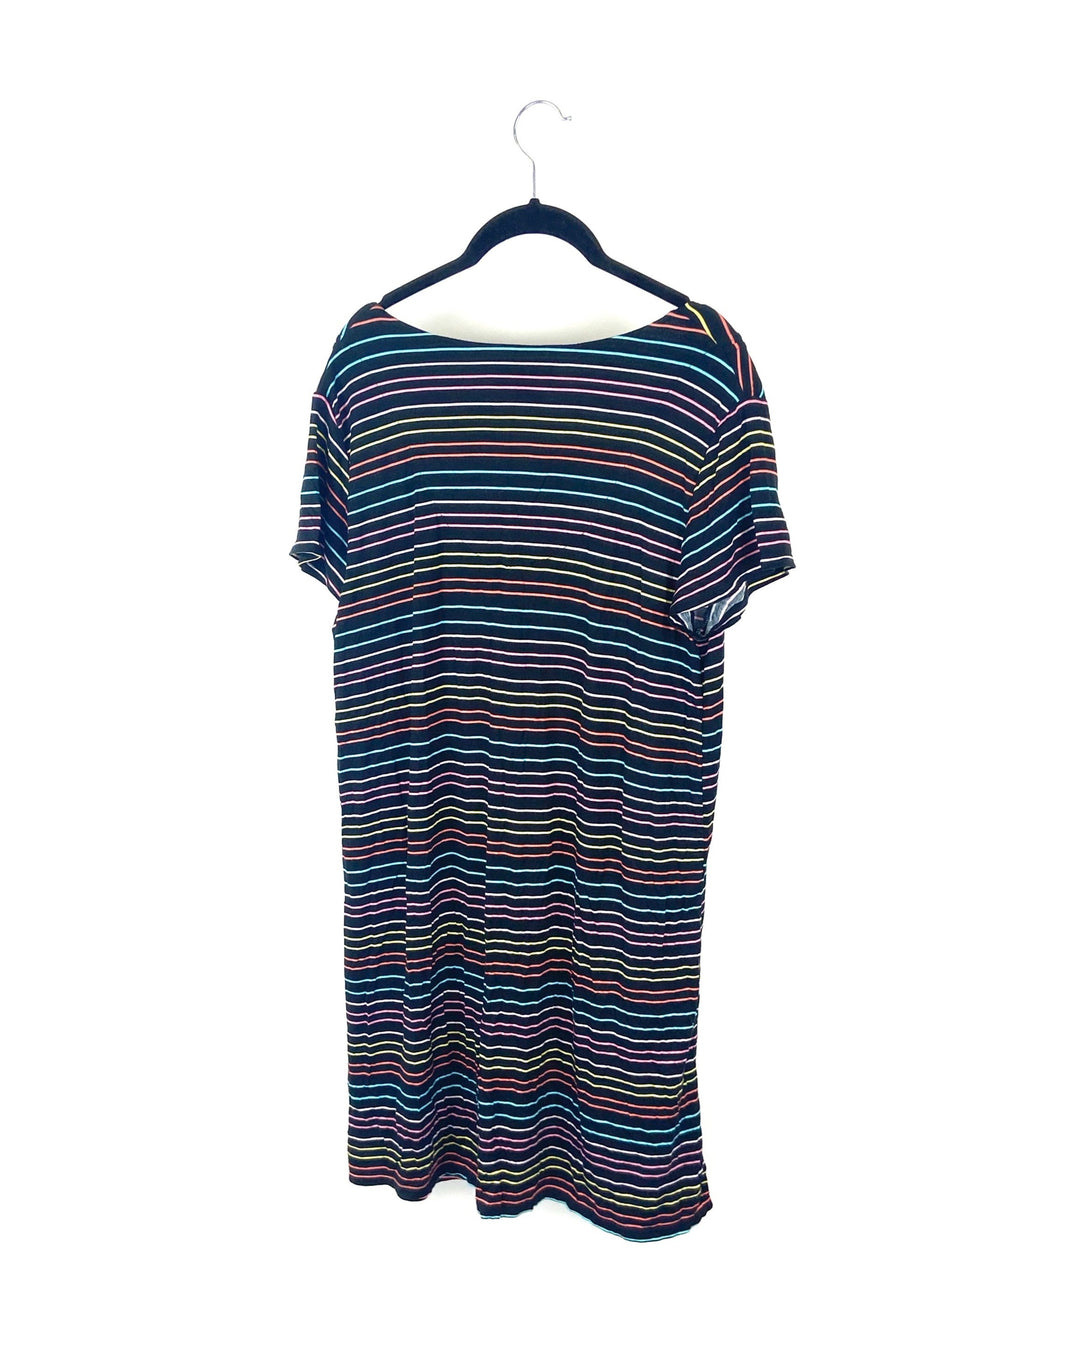 Rainbow Striped Nightgown - Medium